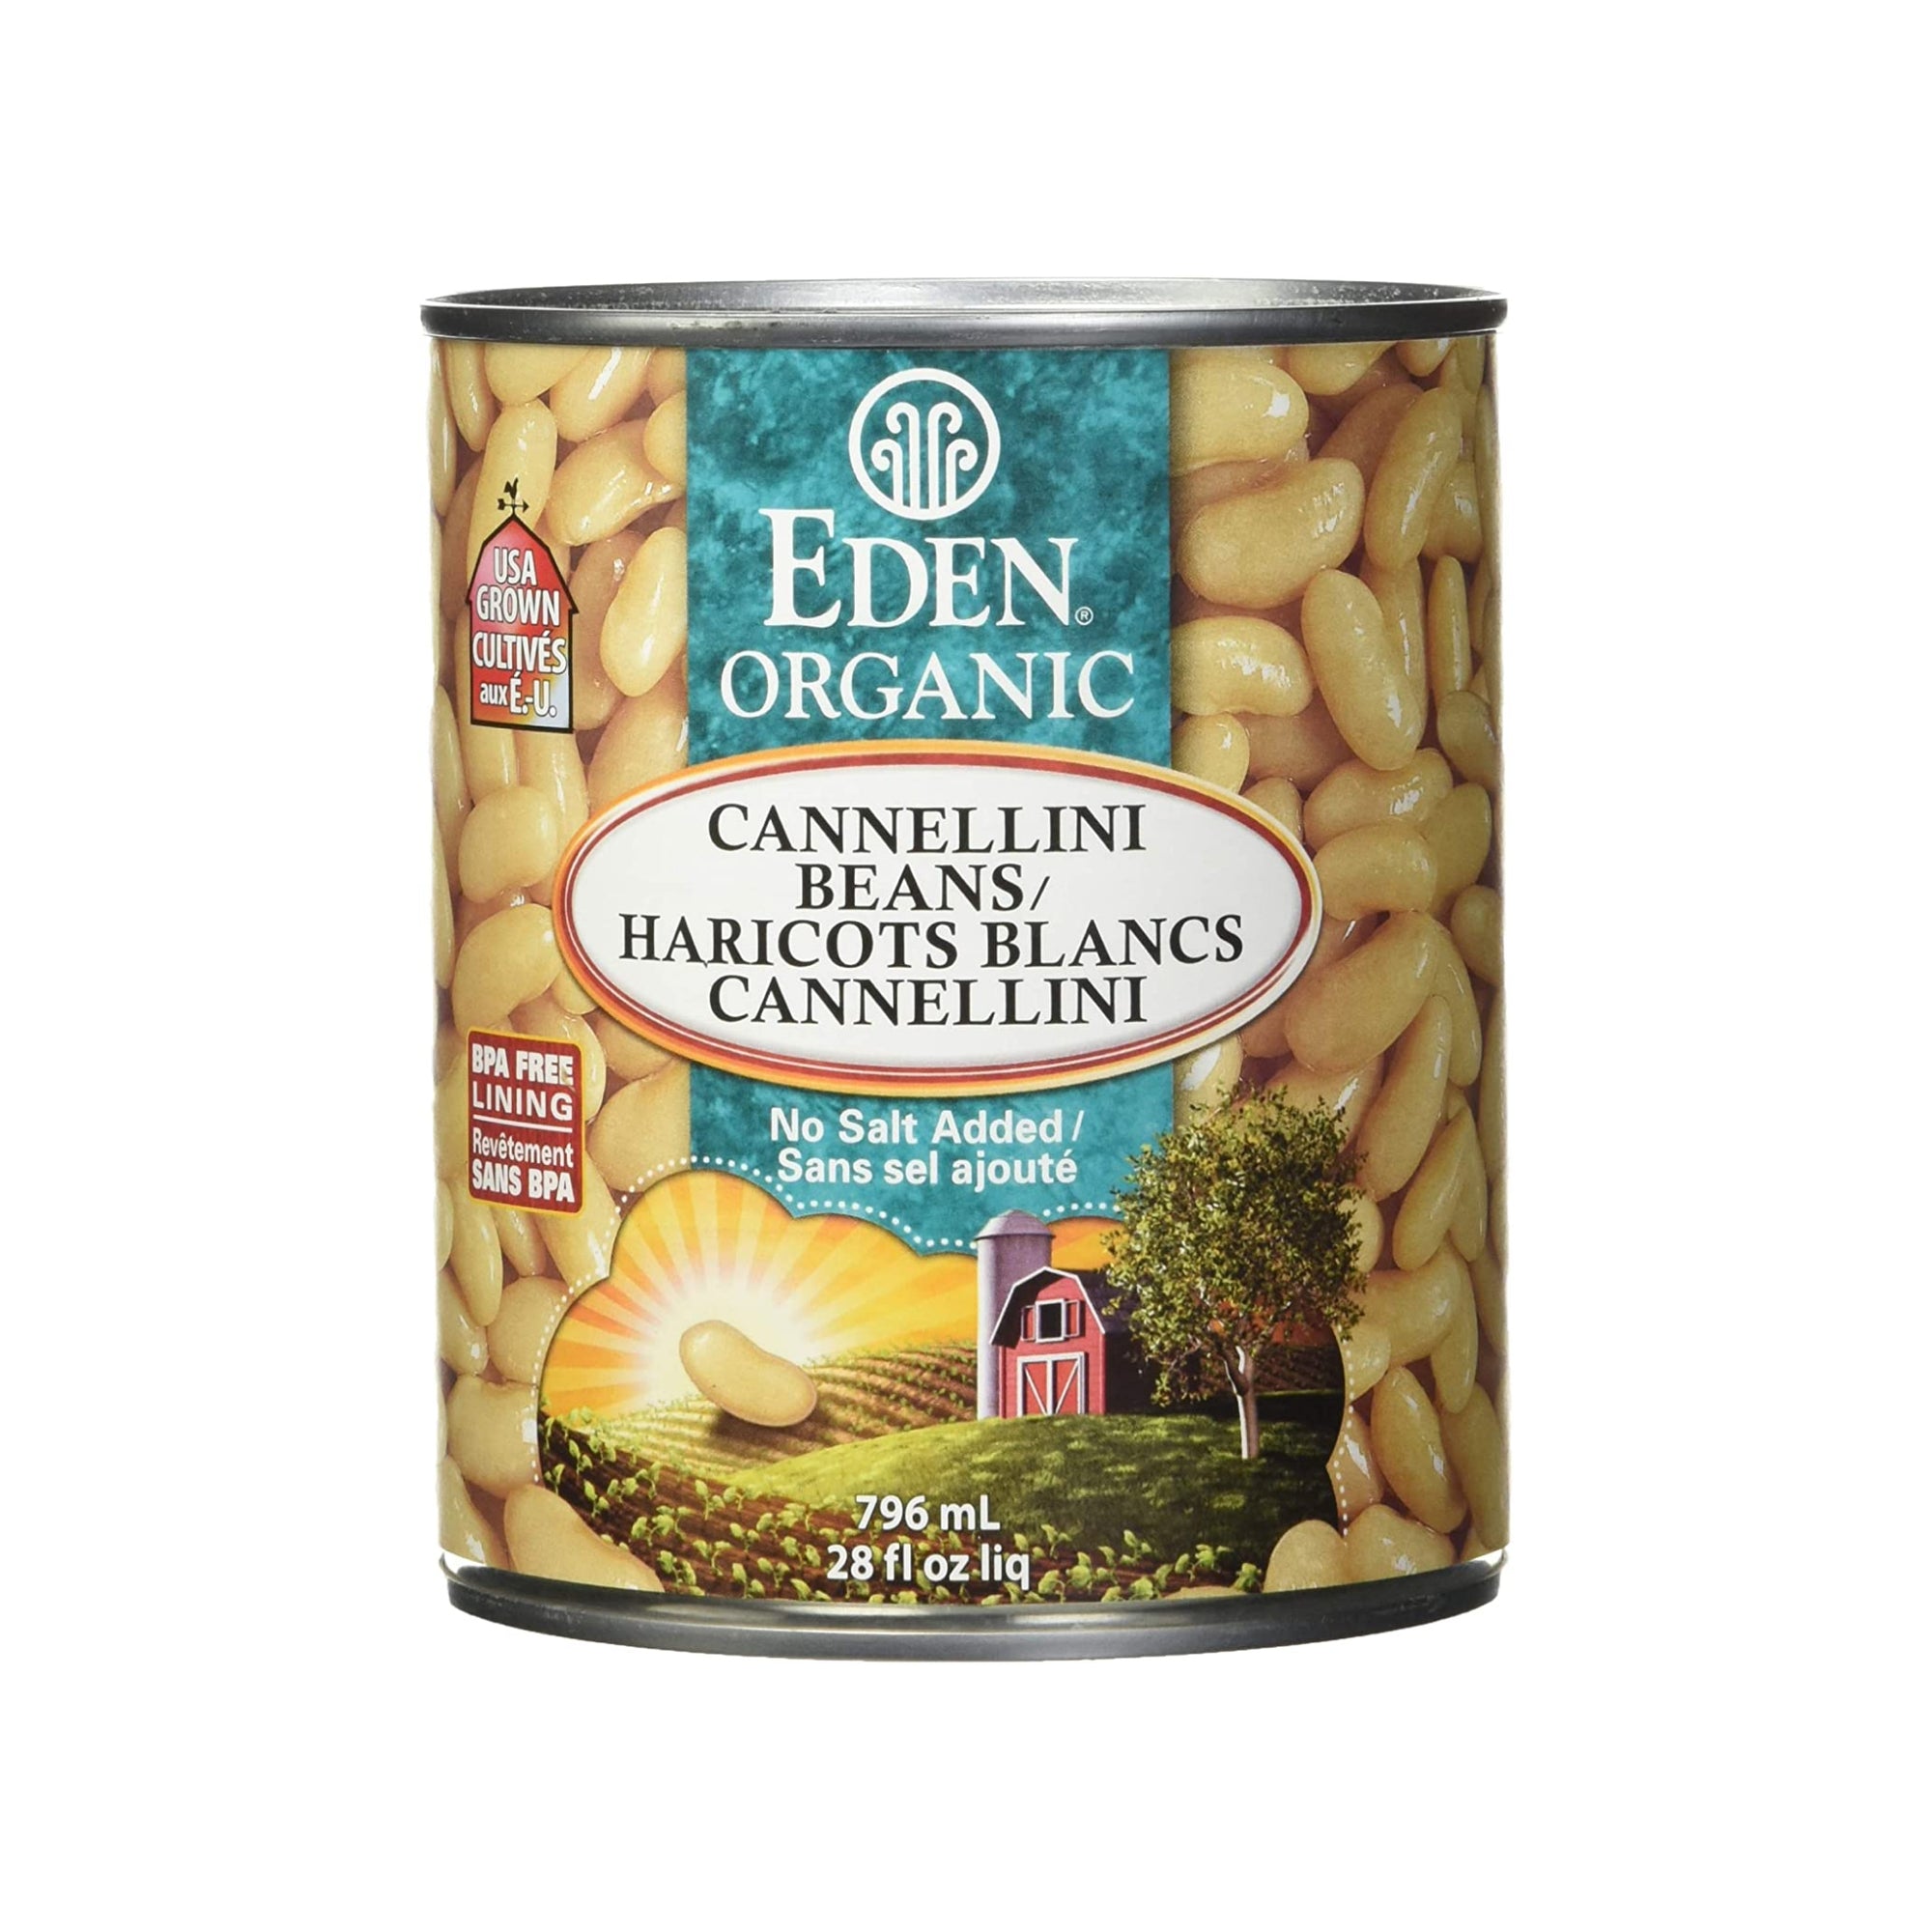 Eden Organic Cannellini Beans 796ml